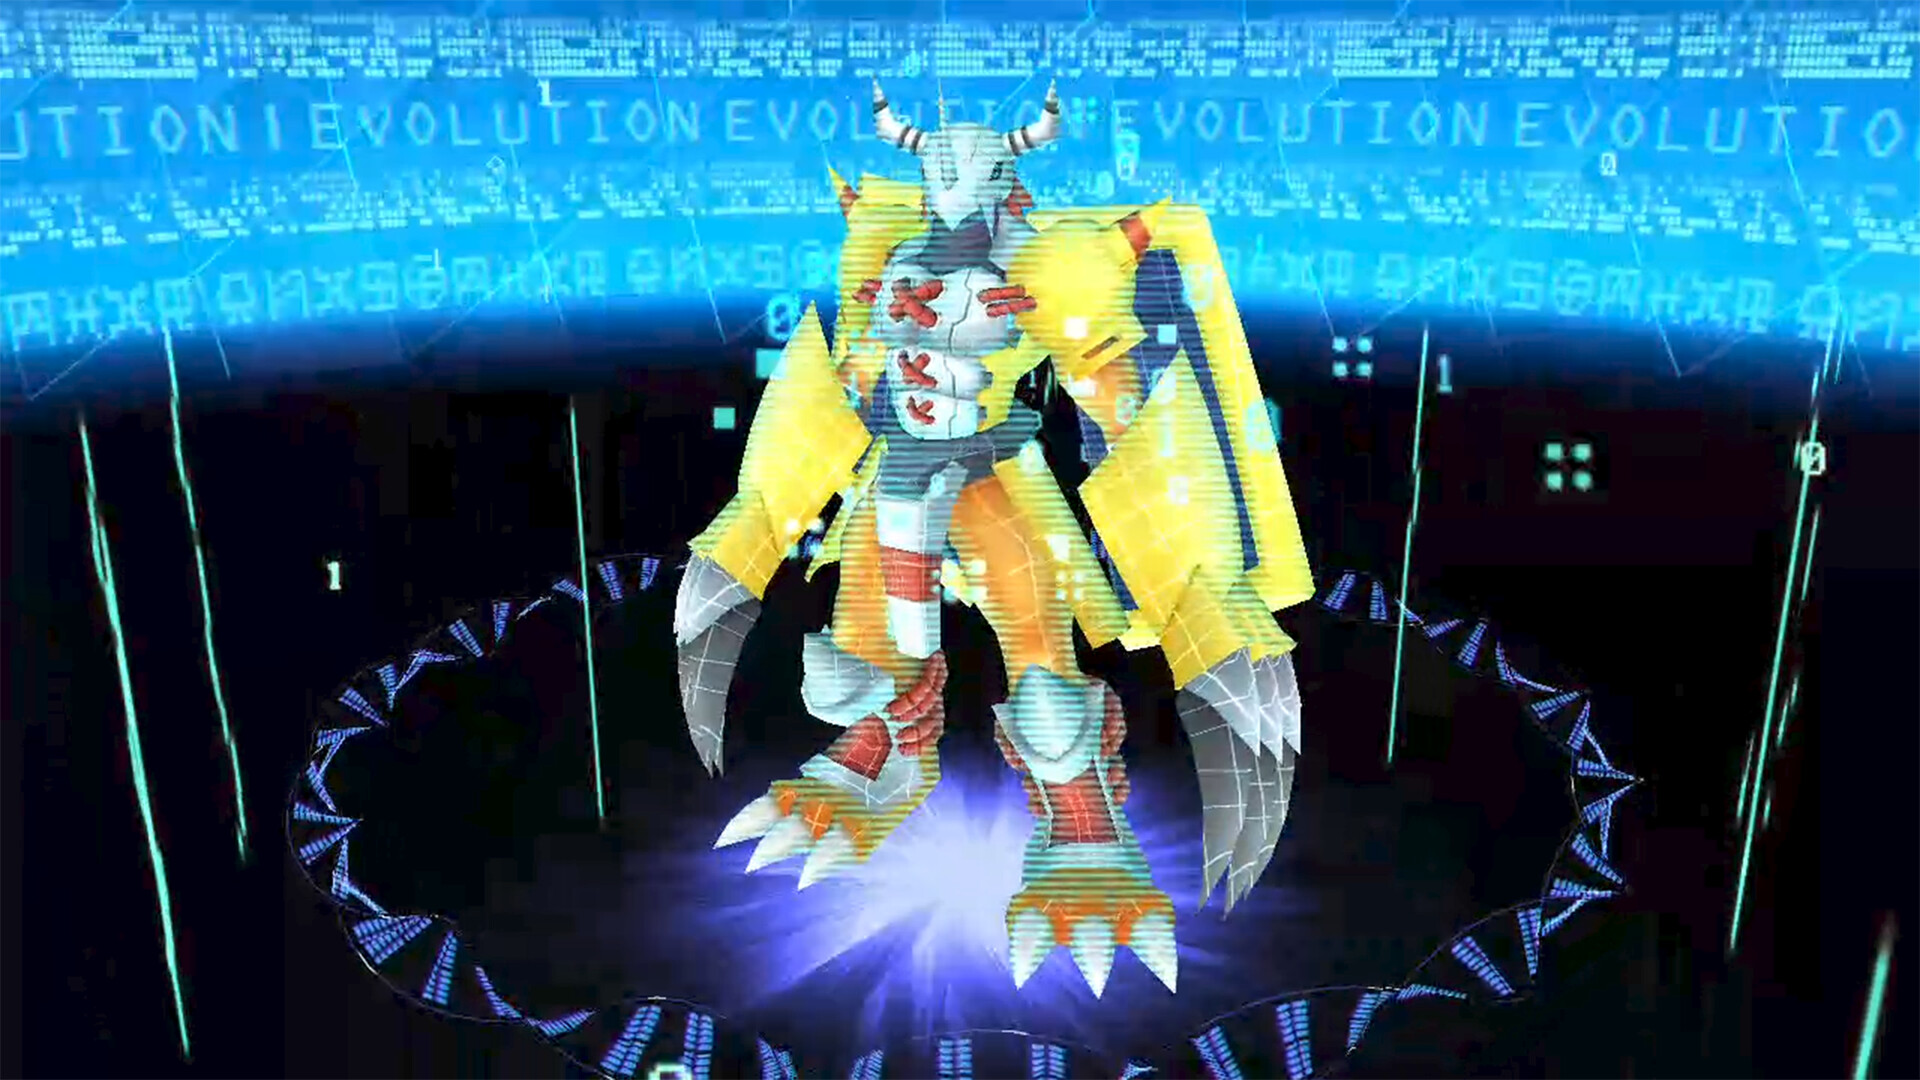 Digimon World: Next Order - Wikipedia